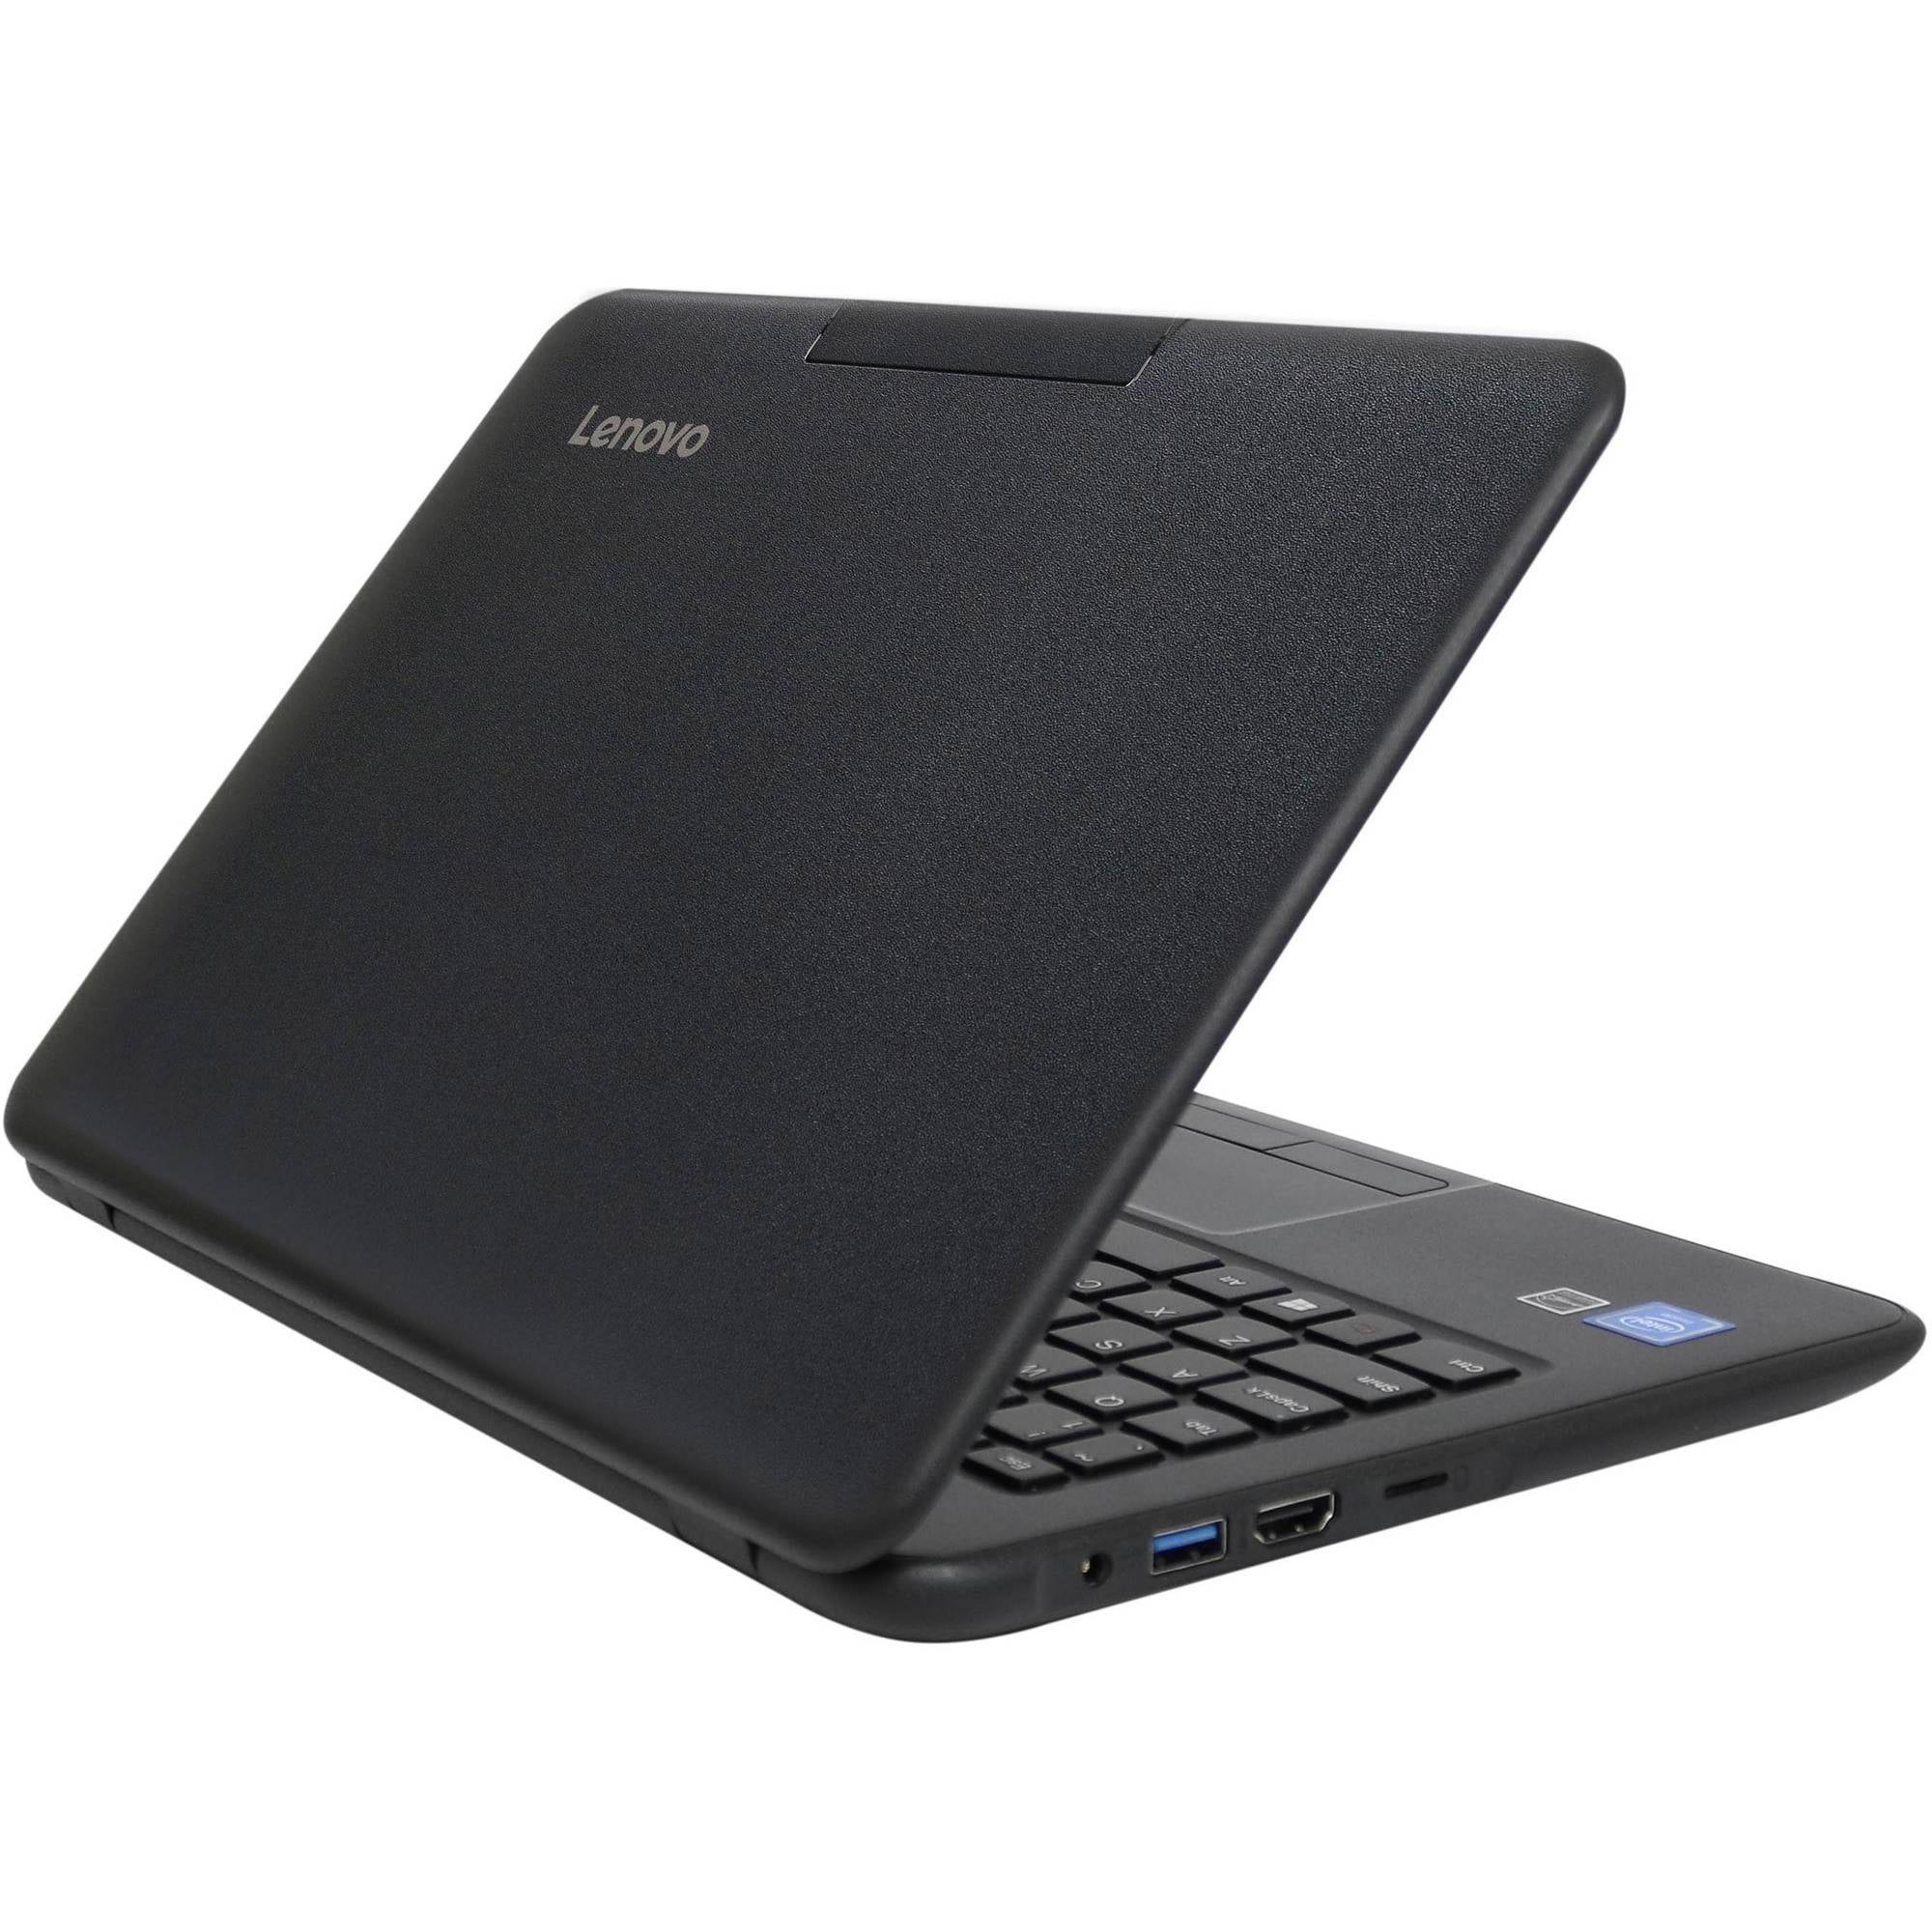 Lenovo ThinkPad N22 11.6